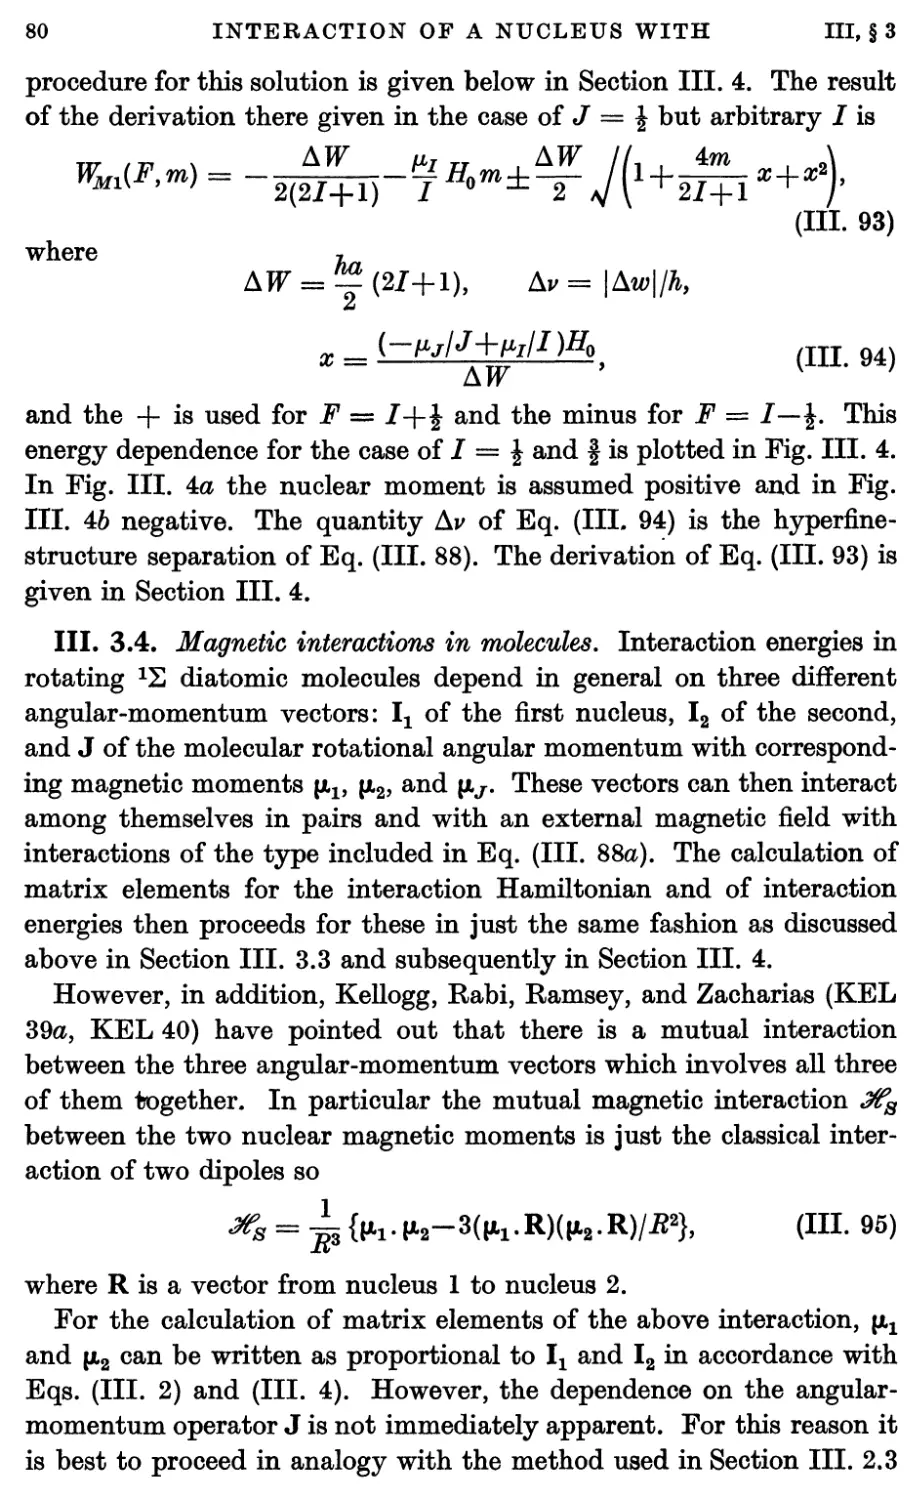 III.3.4. Magnetic interactions in molecules